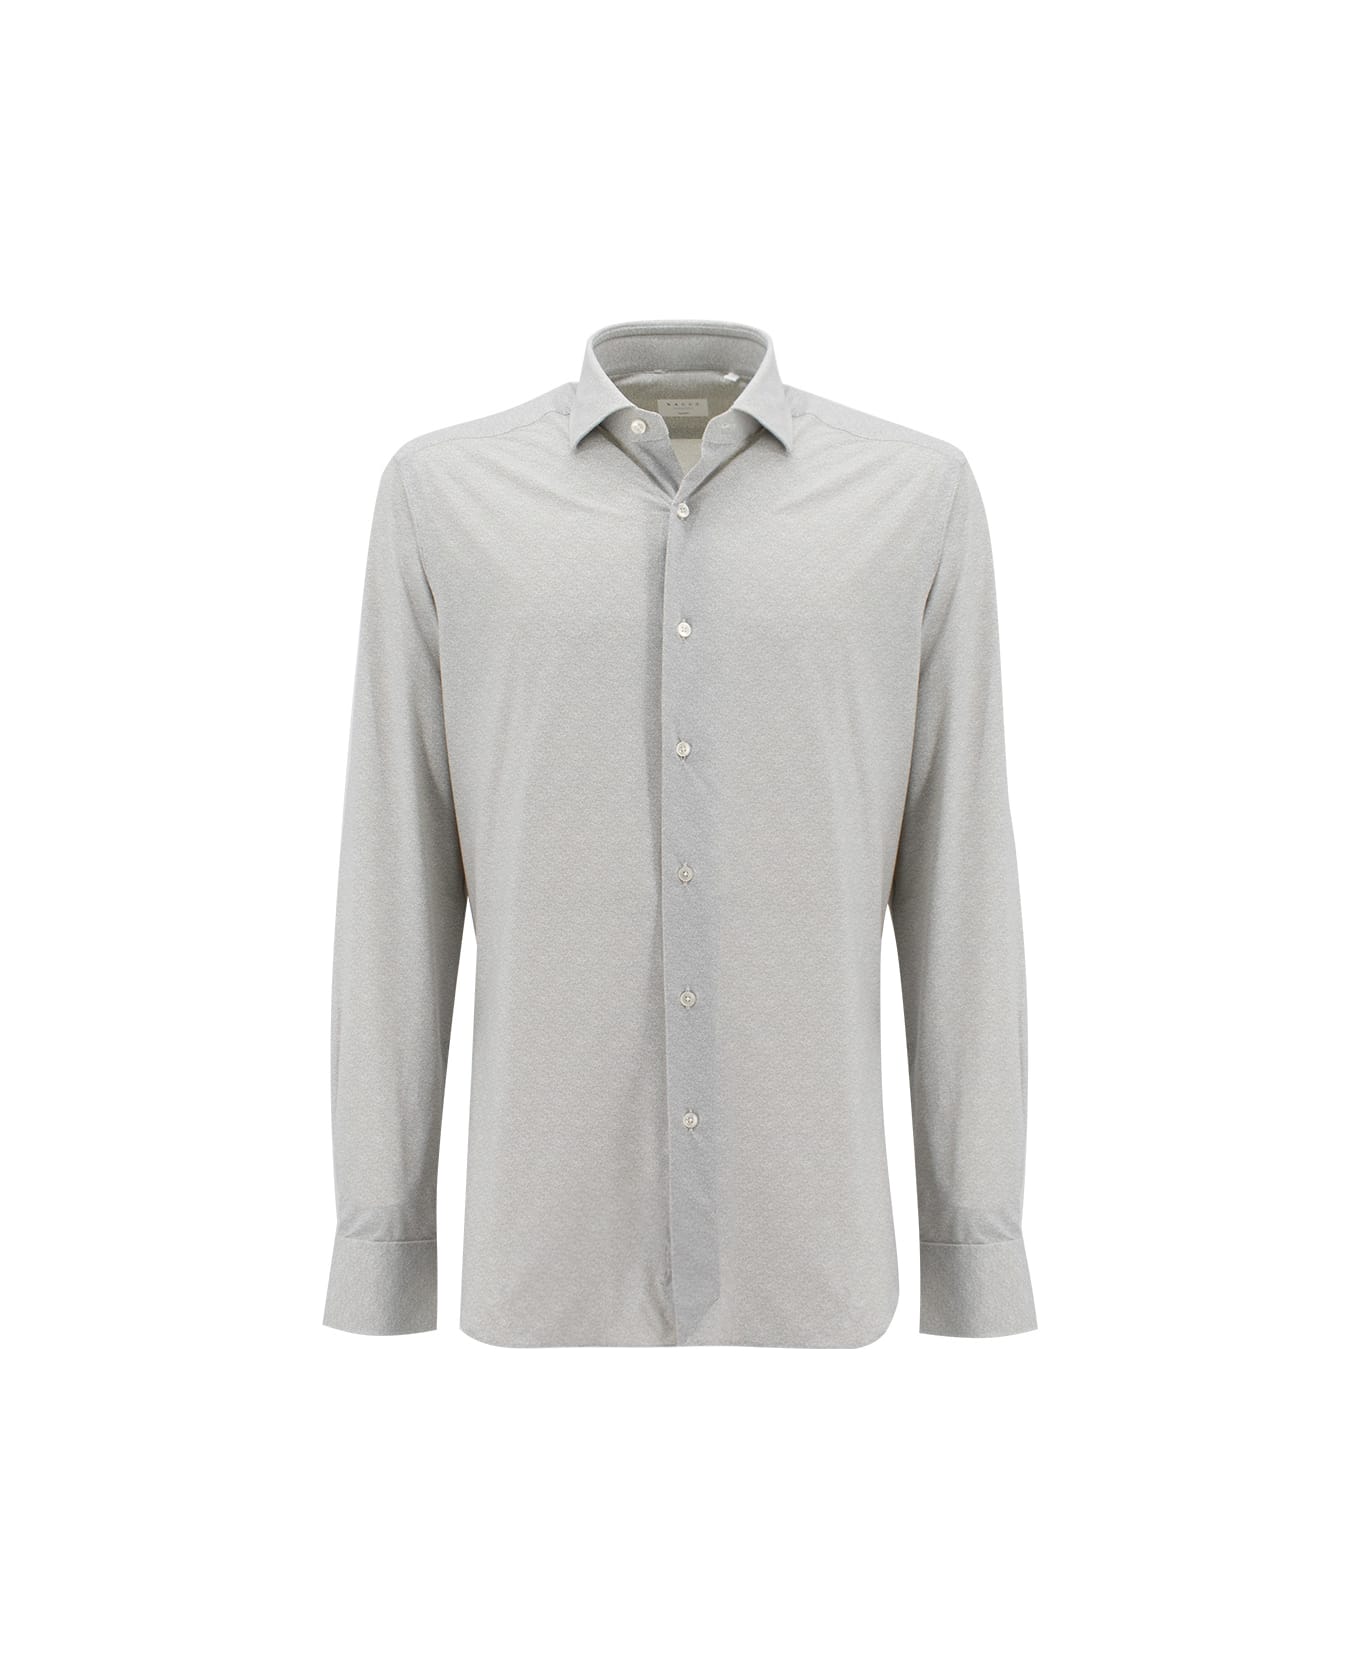 Xacus Shirt - GREY MELANGE シャツ